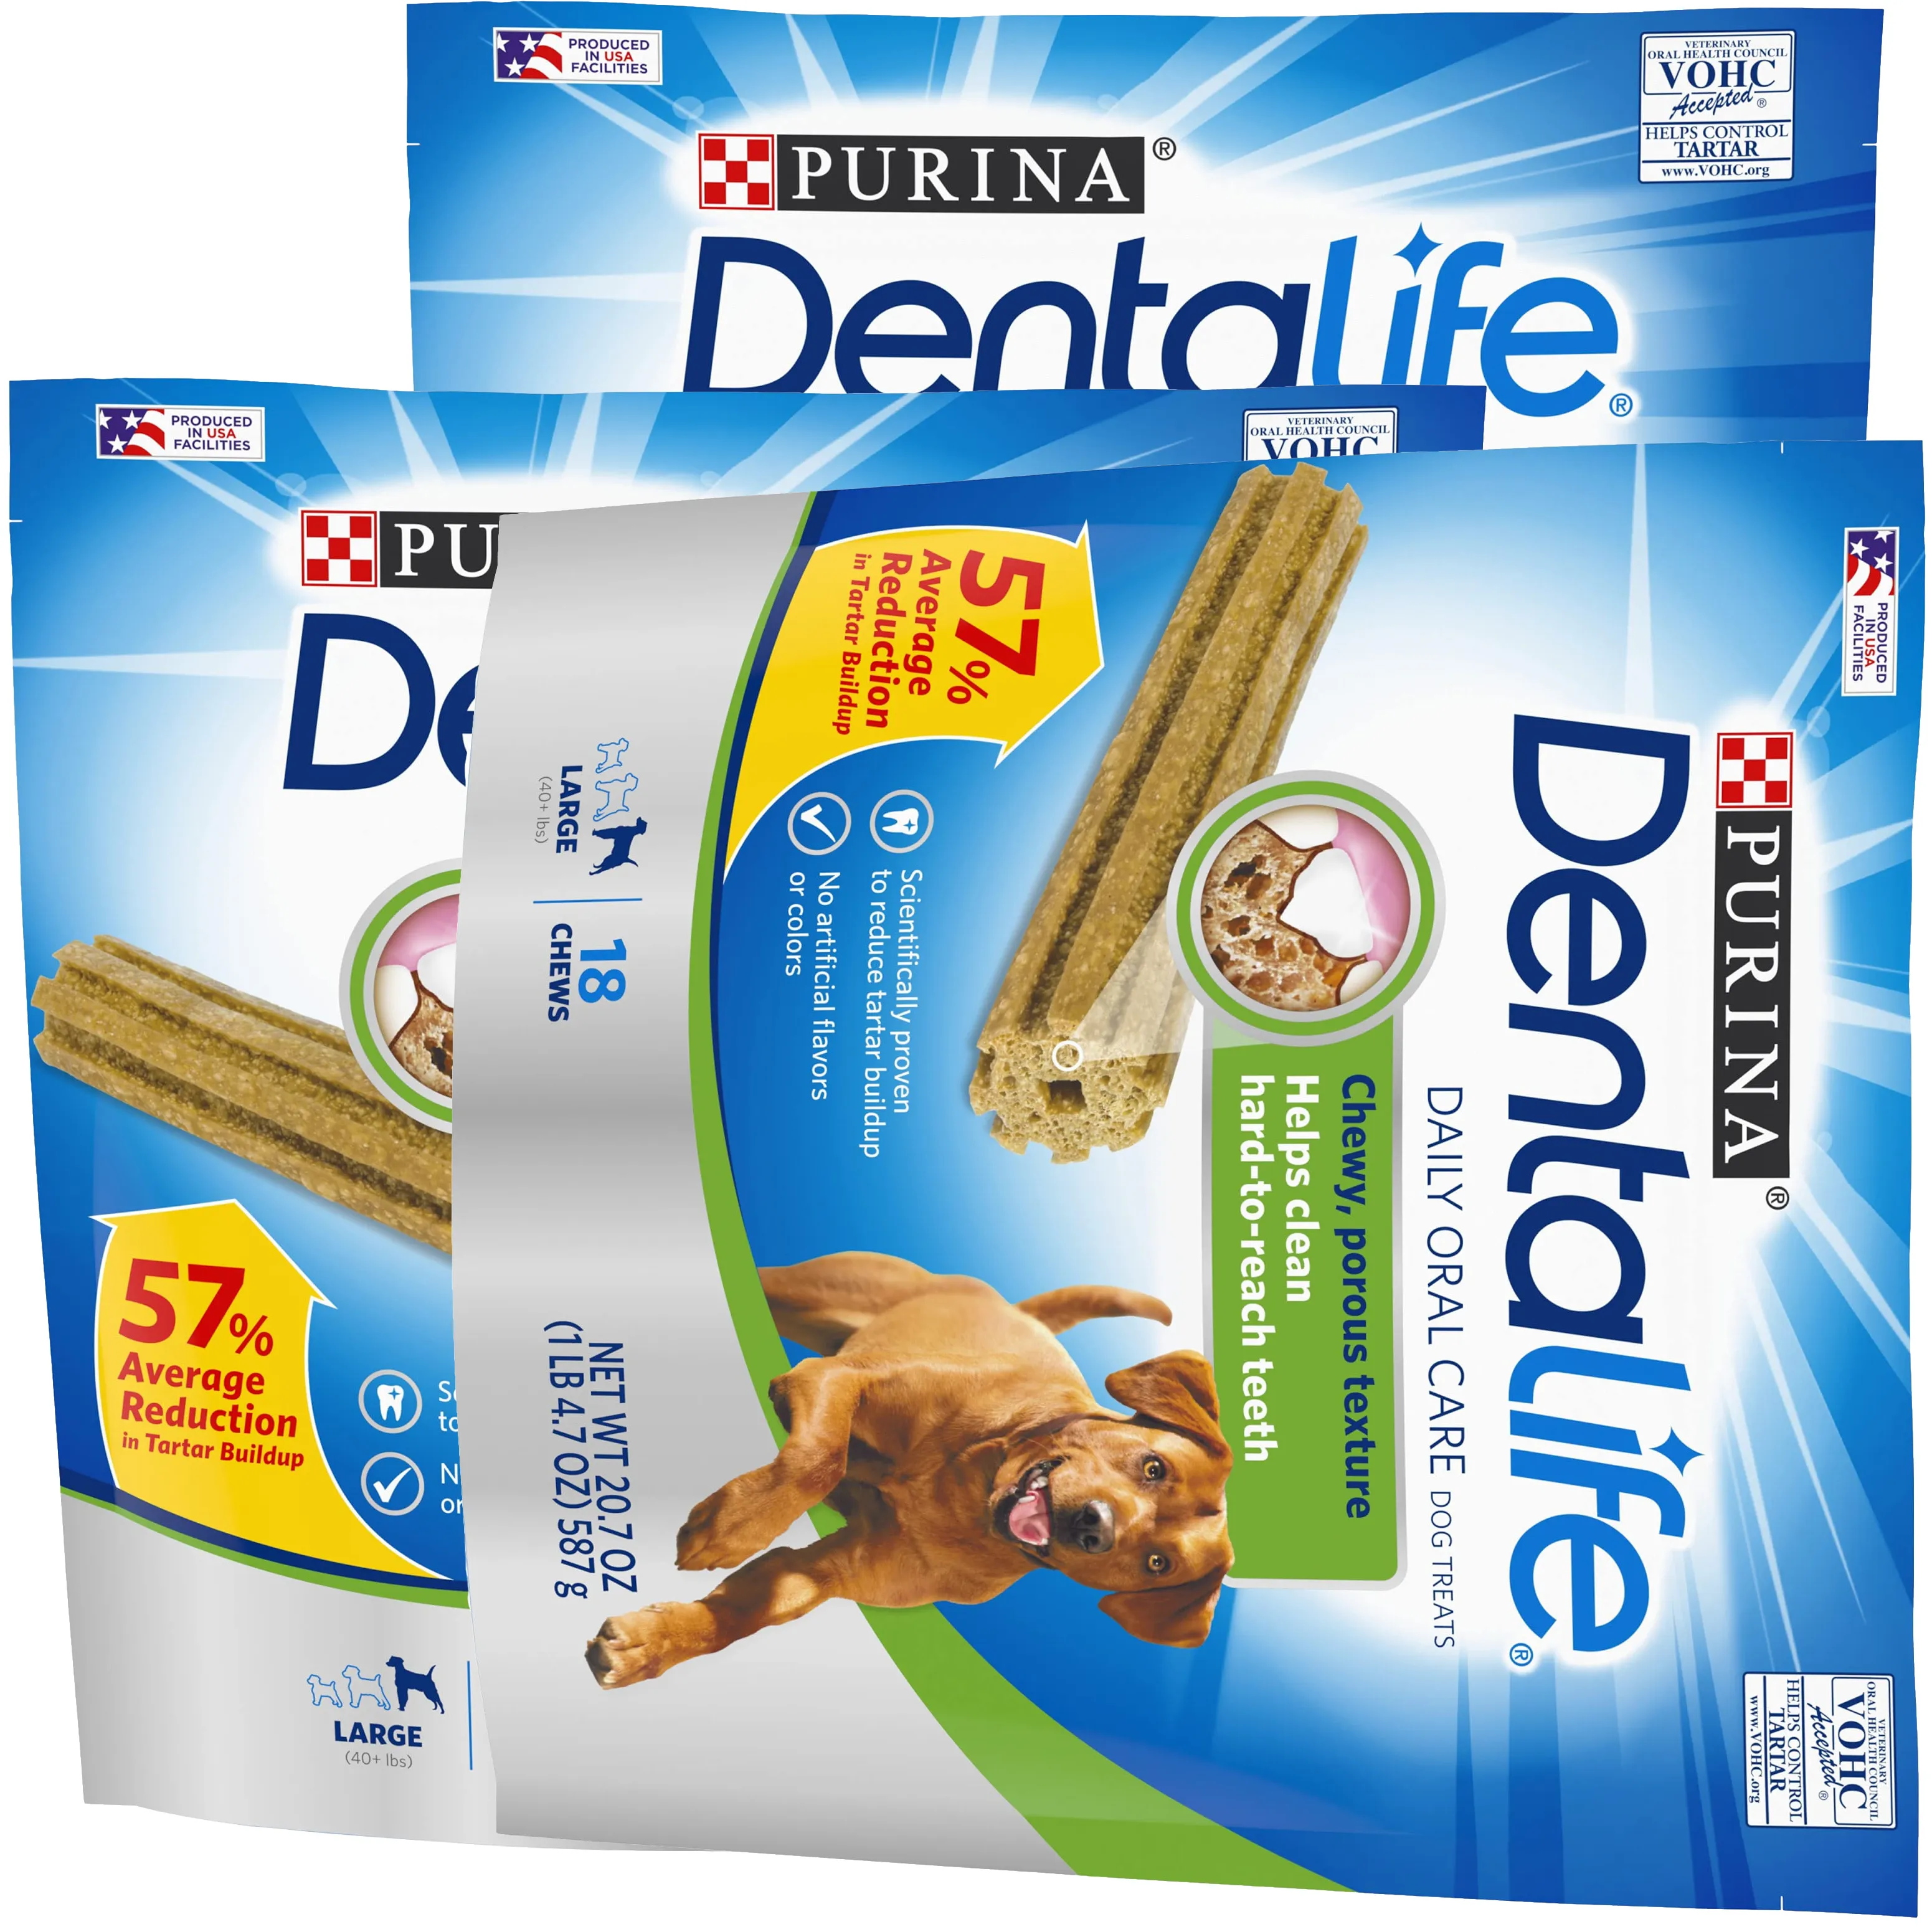 Free Dentalife ActivFresh Daily Dog Chew